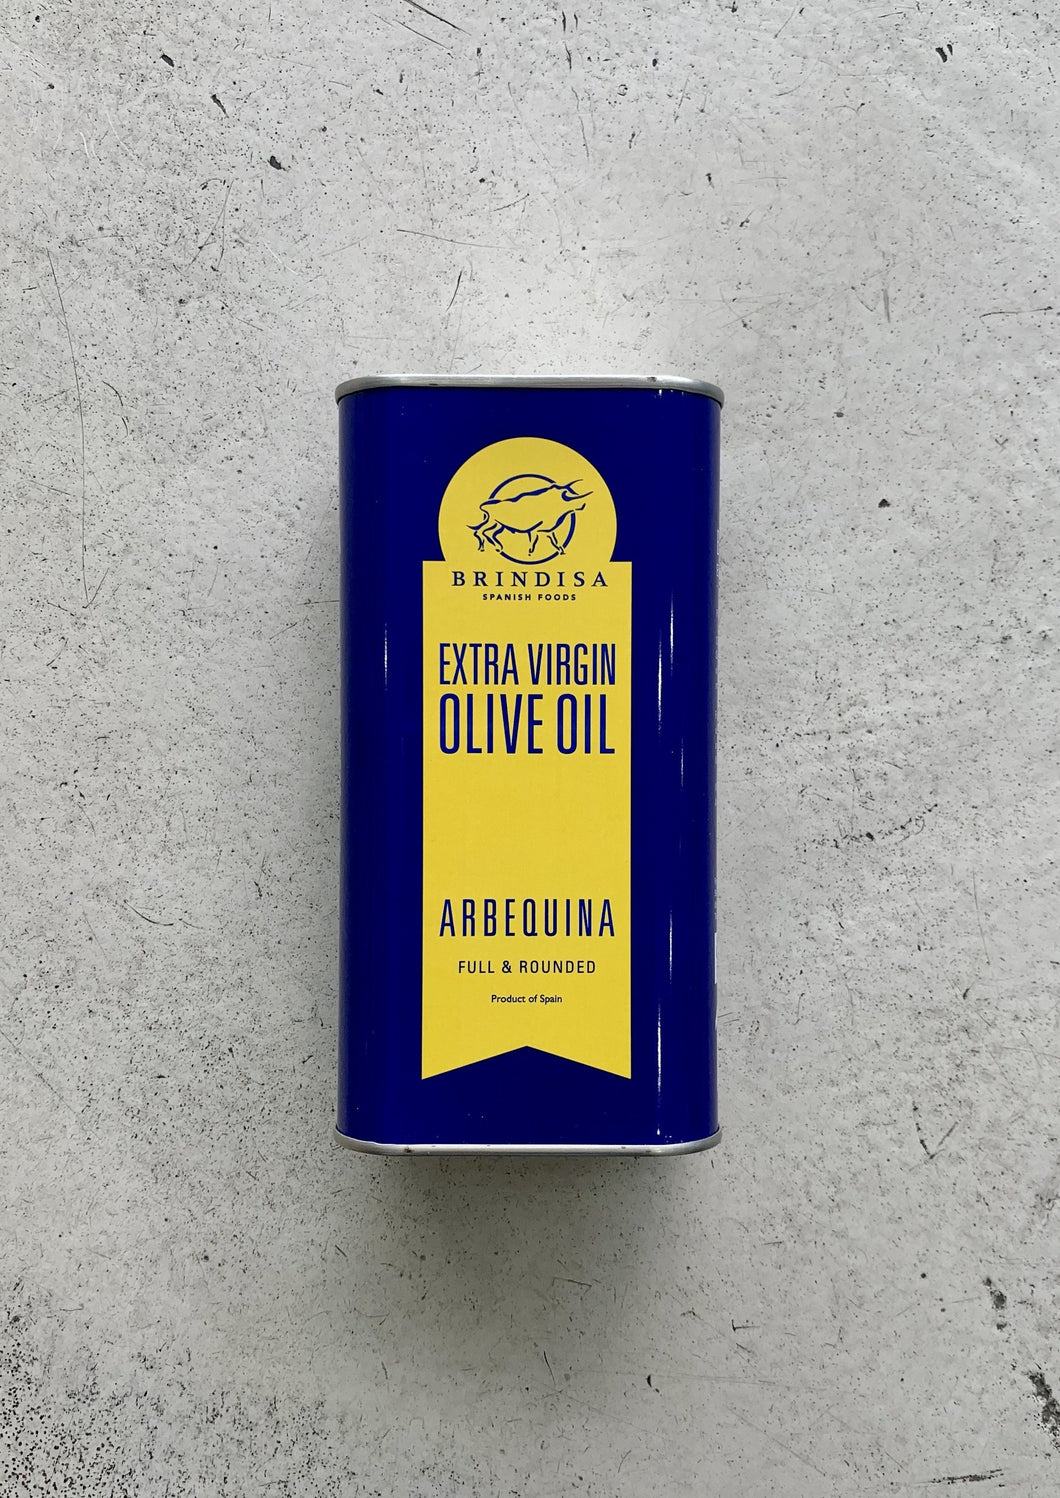 Brindisa Extra Virgin Olive Oil, Arbequina (1L)